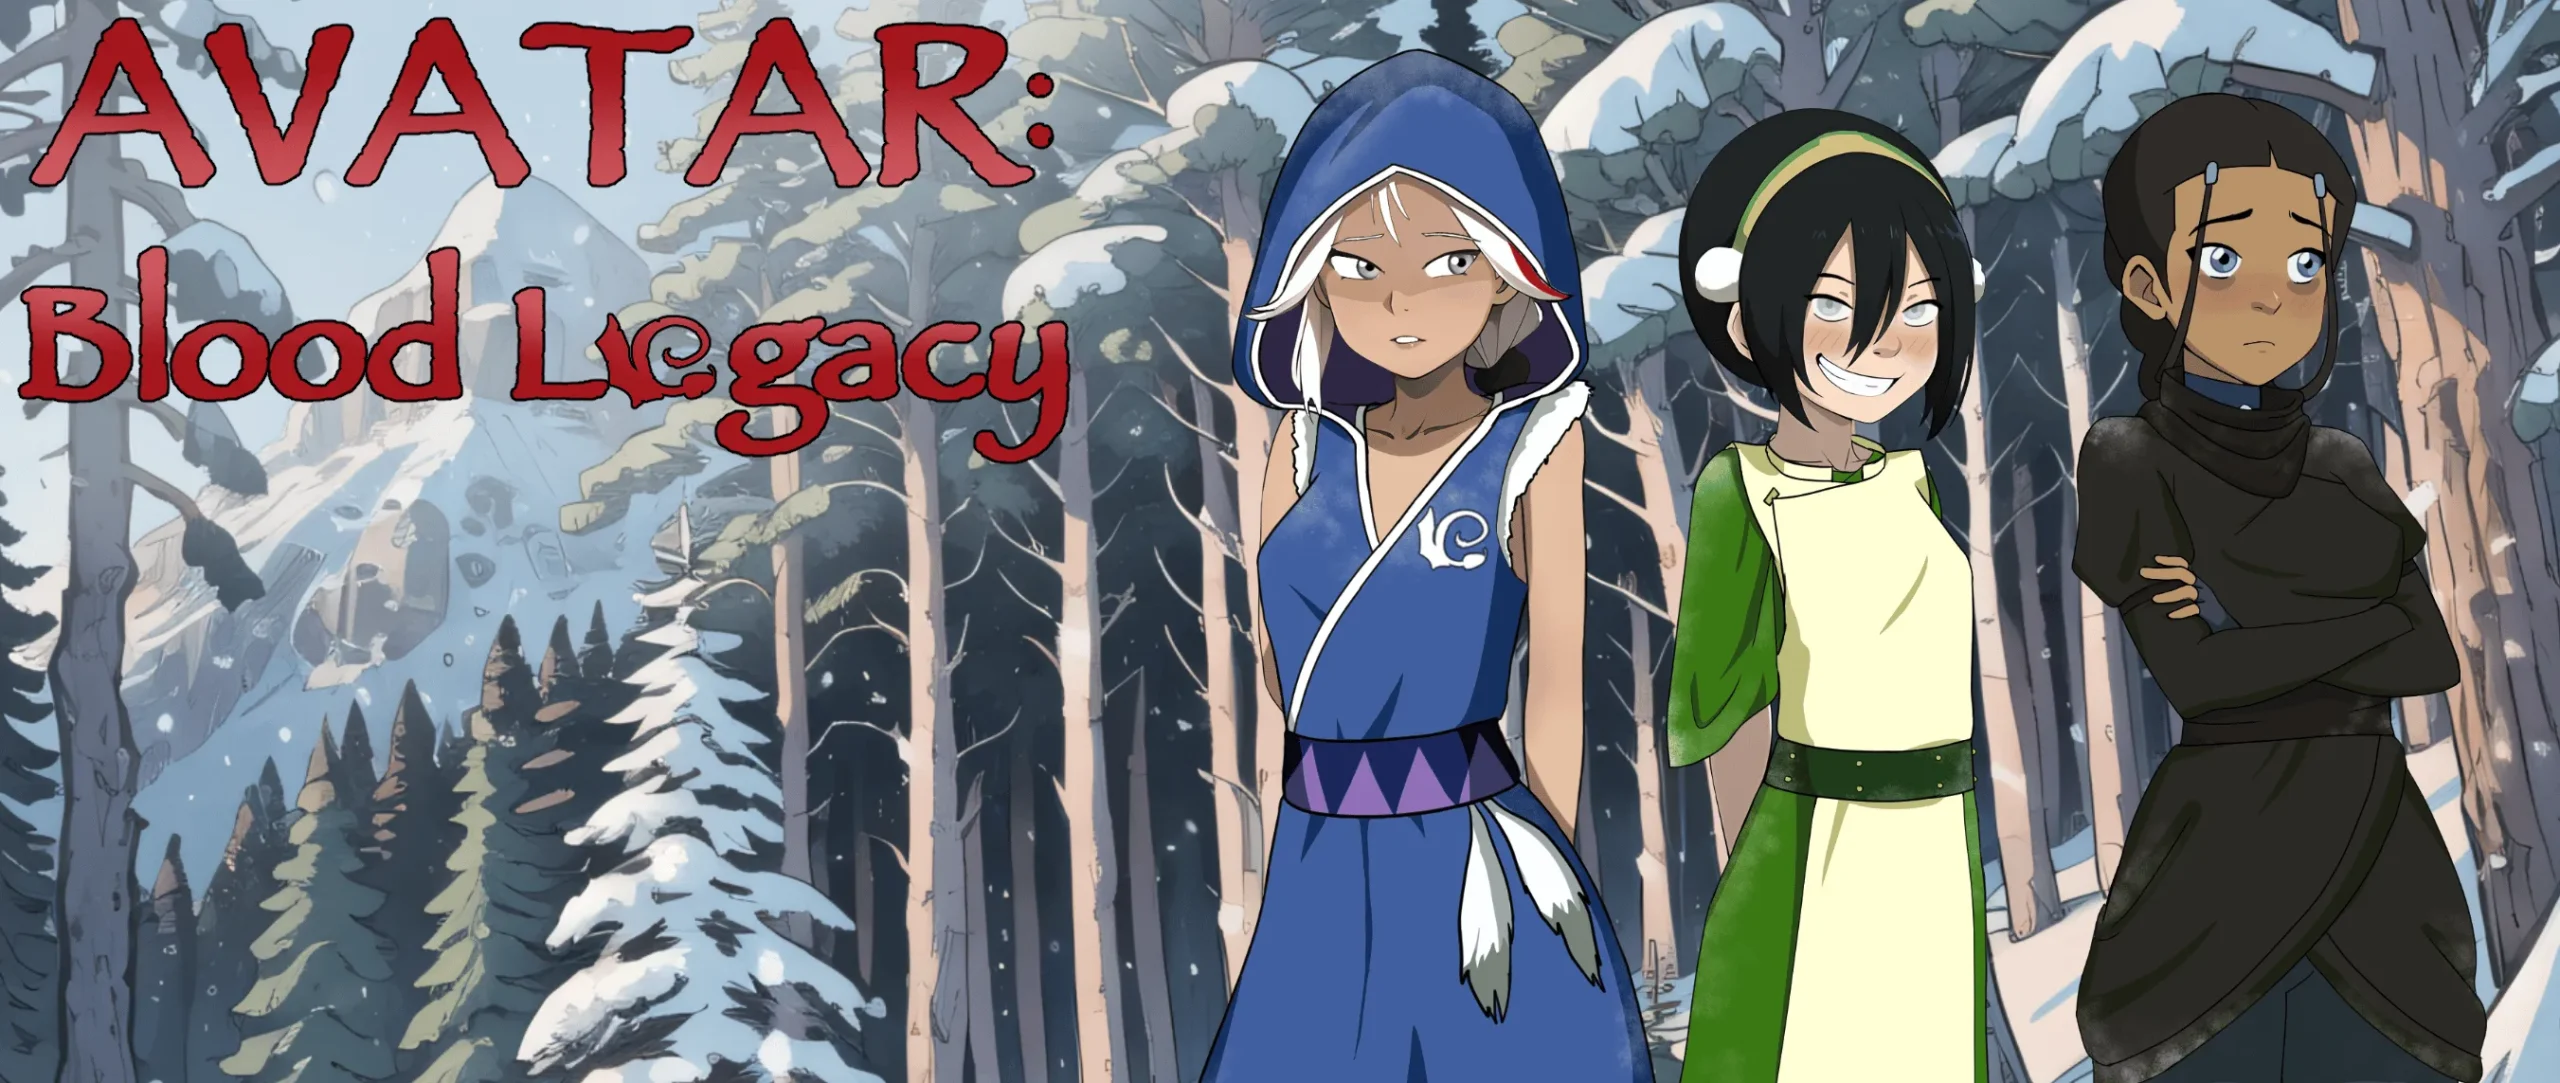 Avatar: Blood Legacy